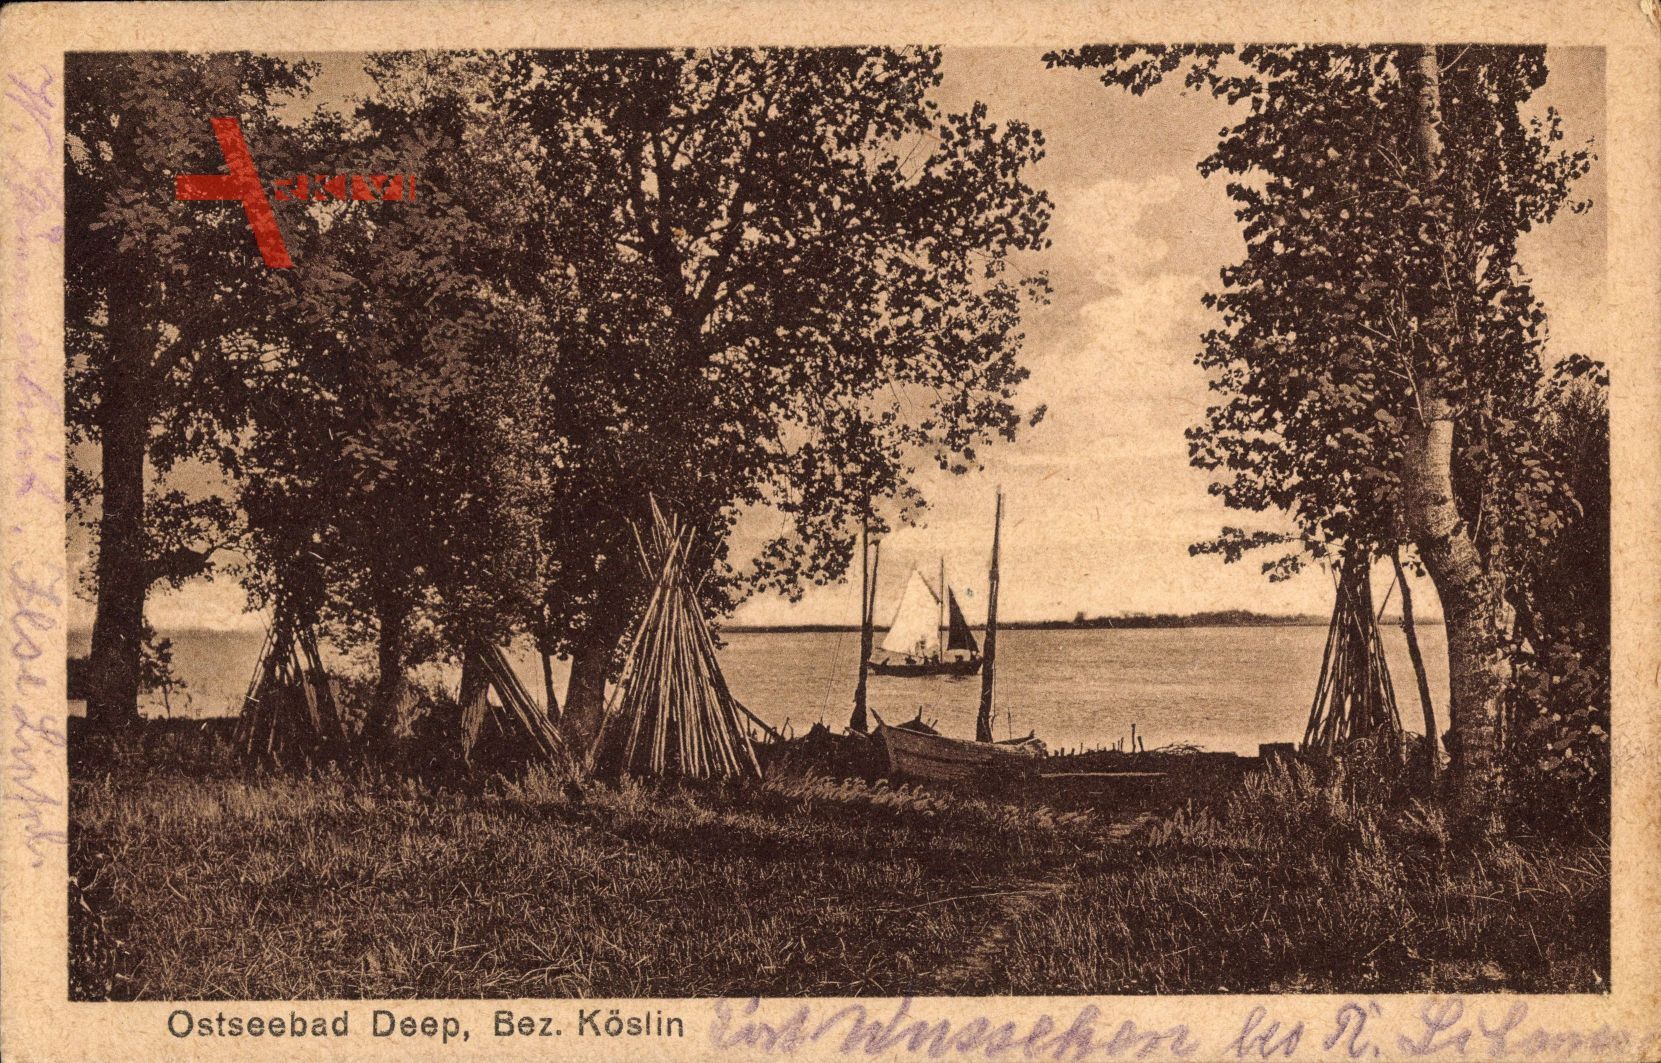 Mrzeżyno Deep Pommern, Ostseebad, Segelboot, Strand